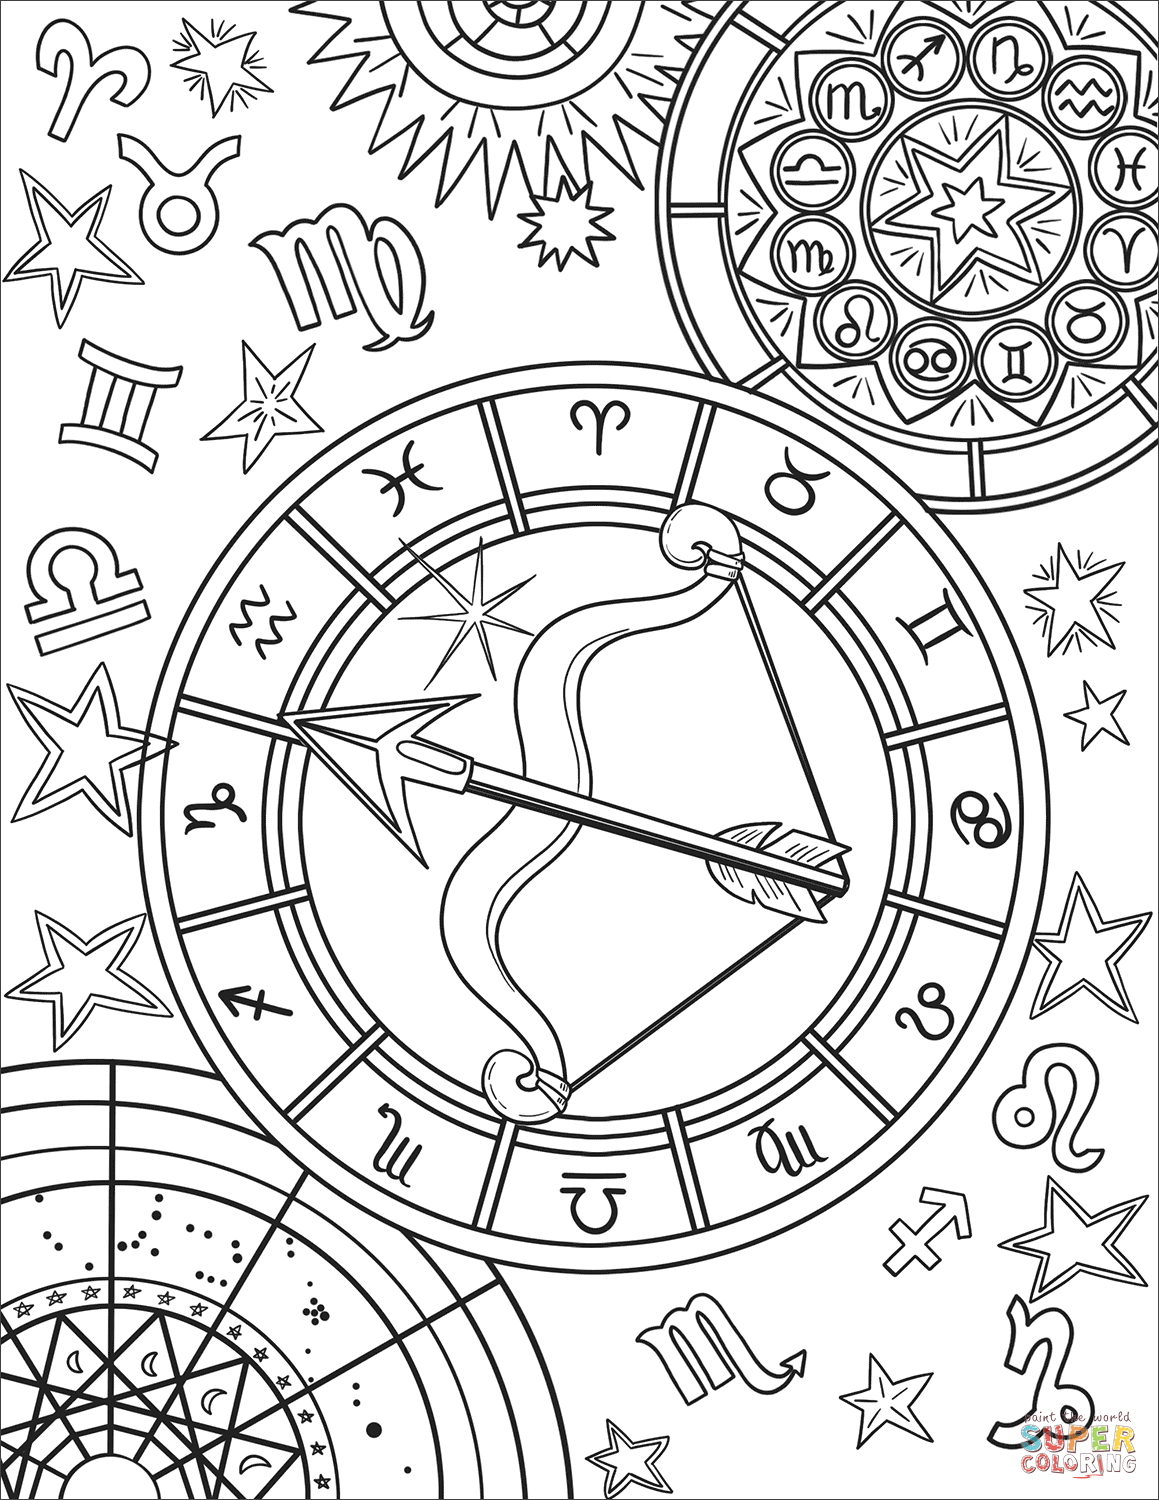 Sagittarius Zodiac Sign coloring page | Free Printable Coloring Pages |  Free printable coloring pages, Printable coloring pages, Free printable  coloring